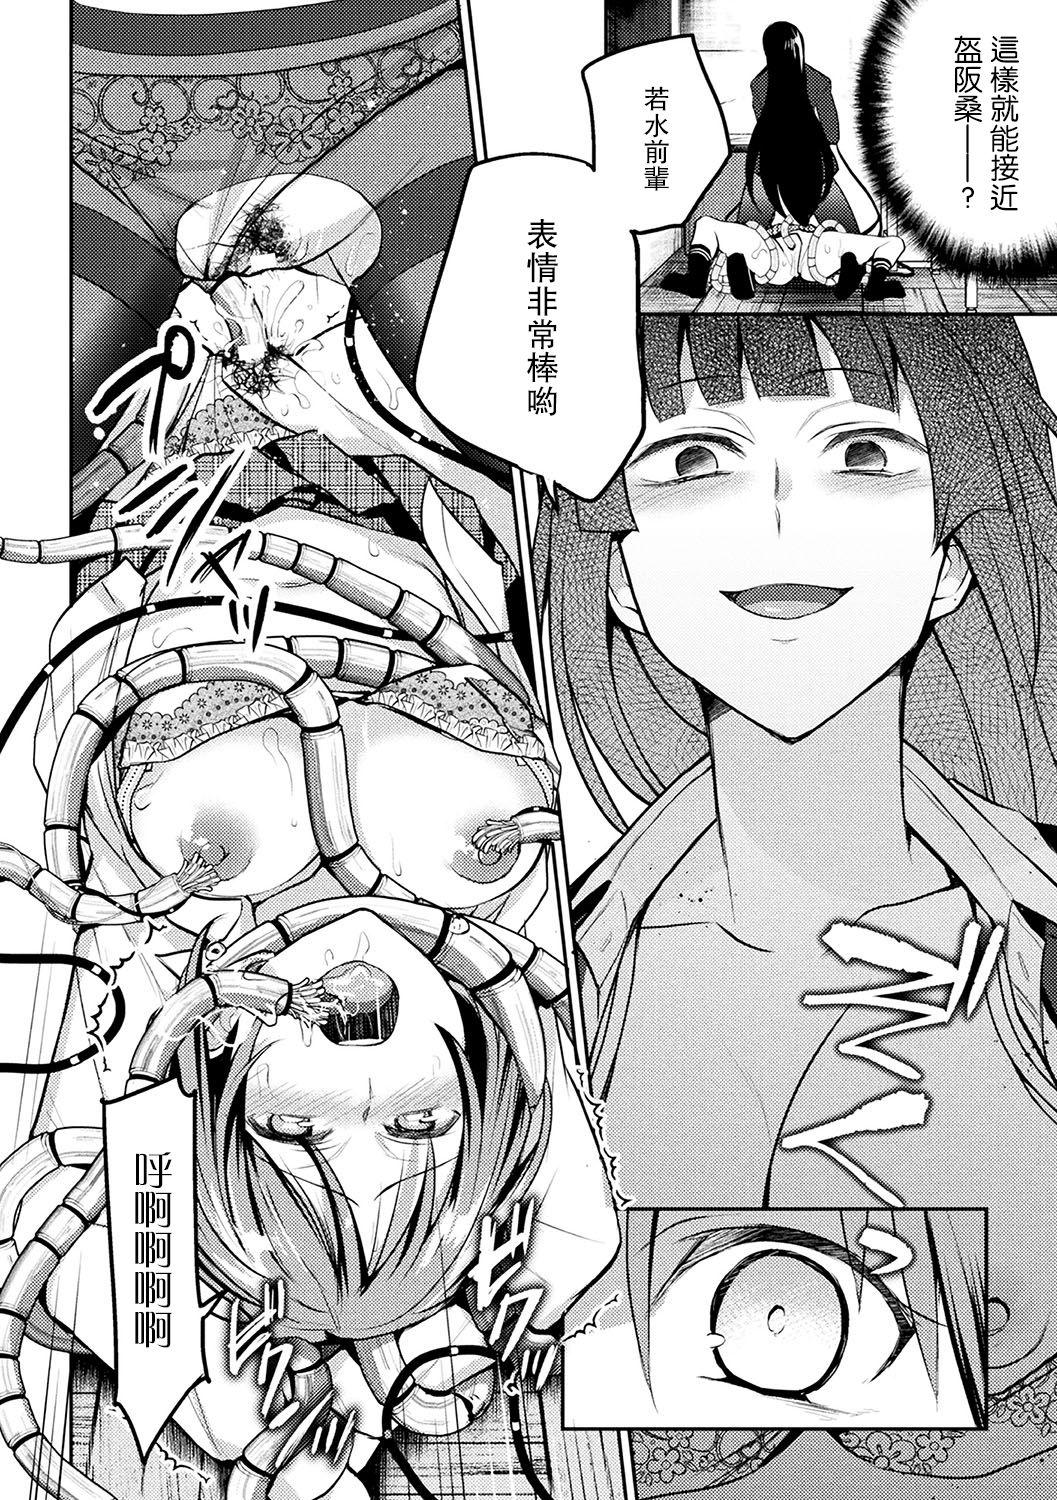 Kaibutsu no Hitomi - Monster's pupil 15